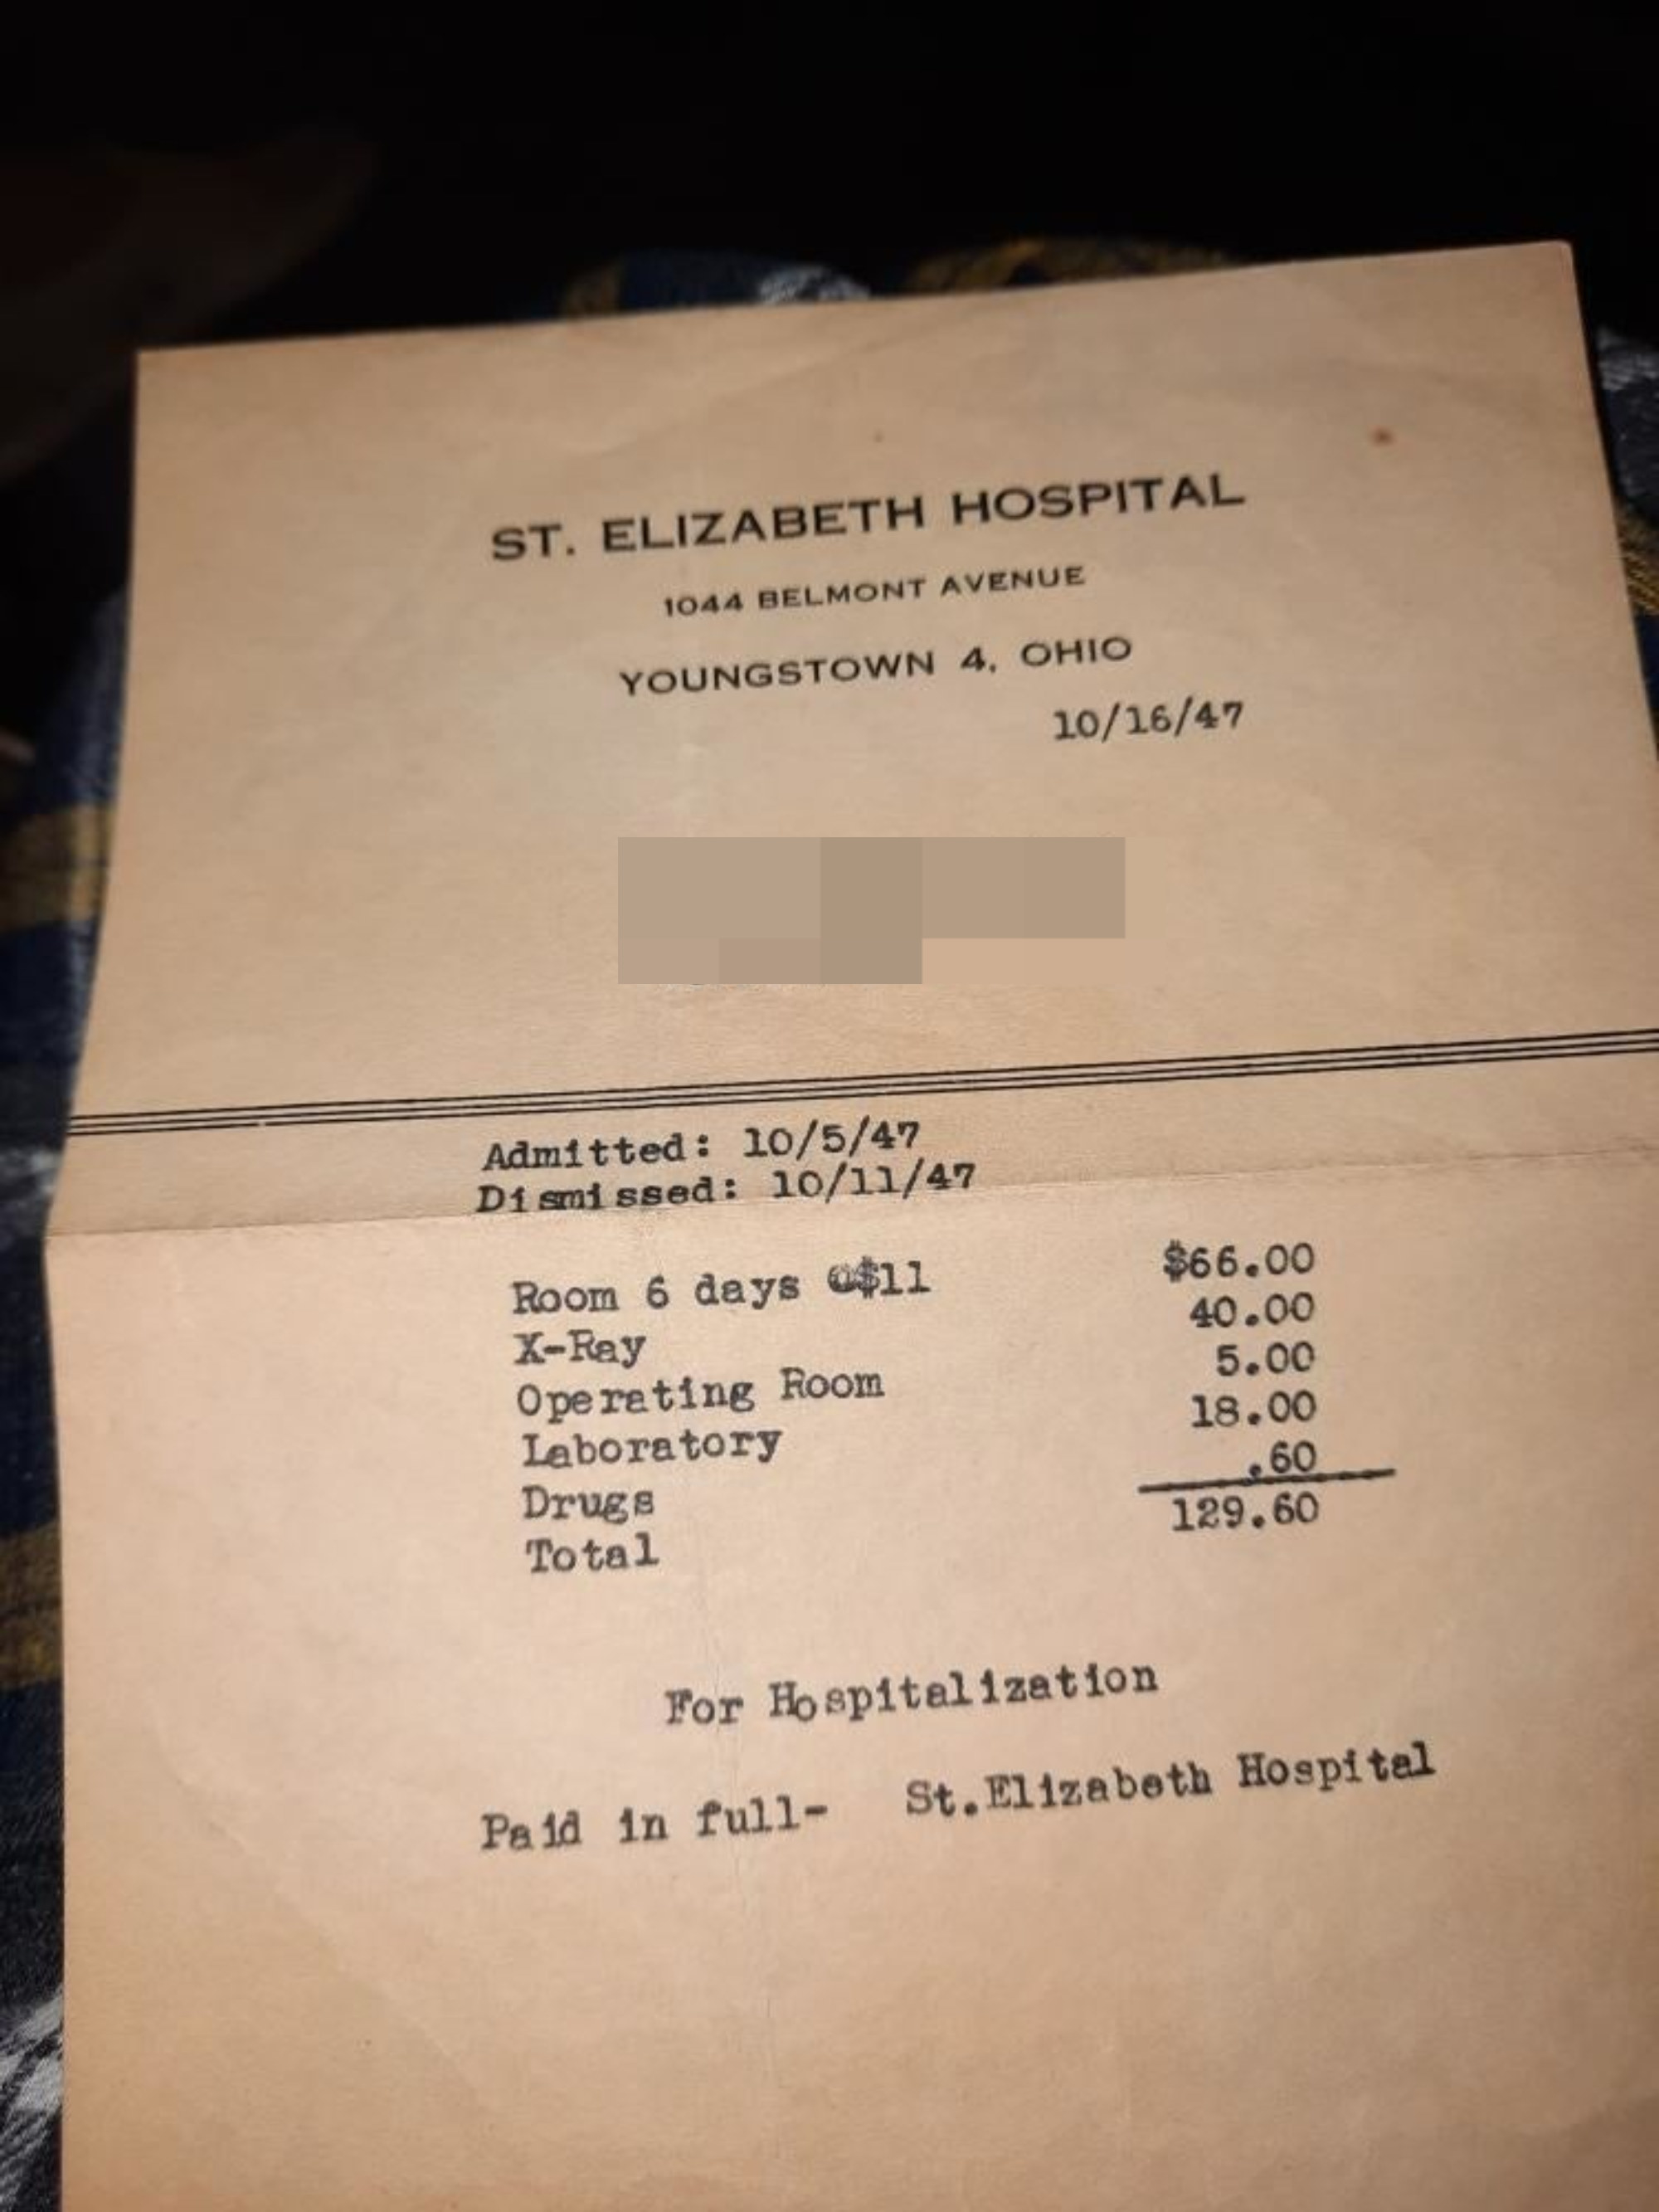 A hospital bill from 1947